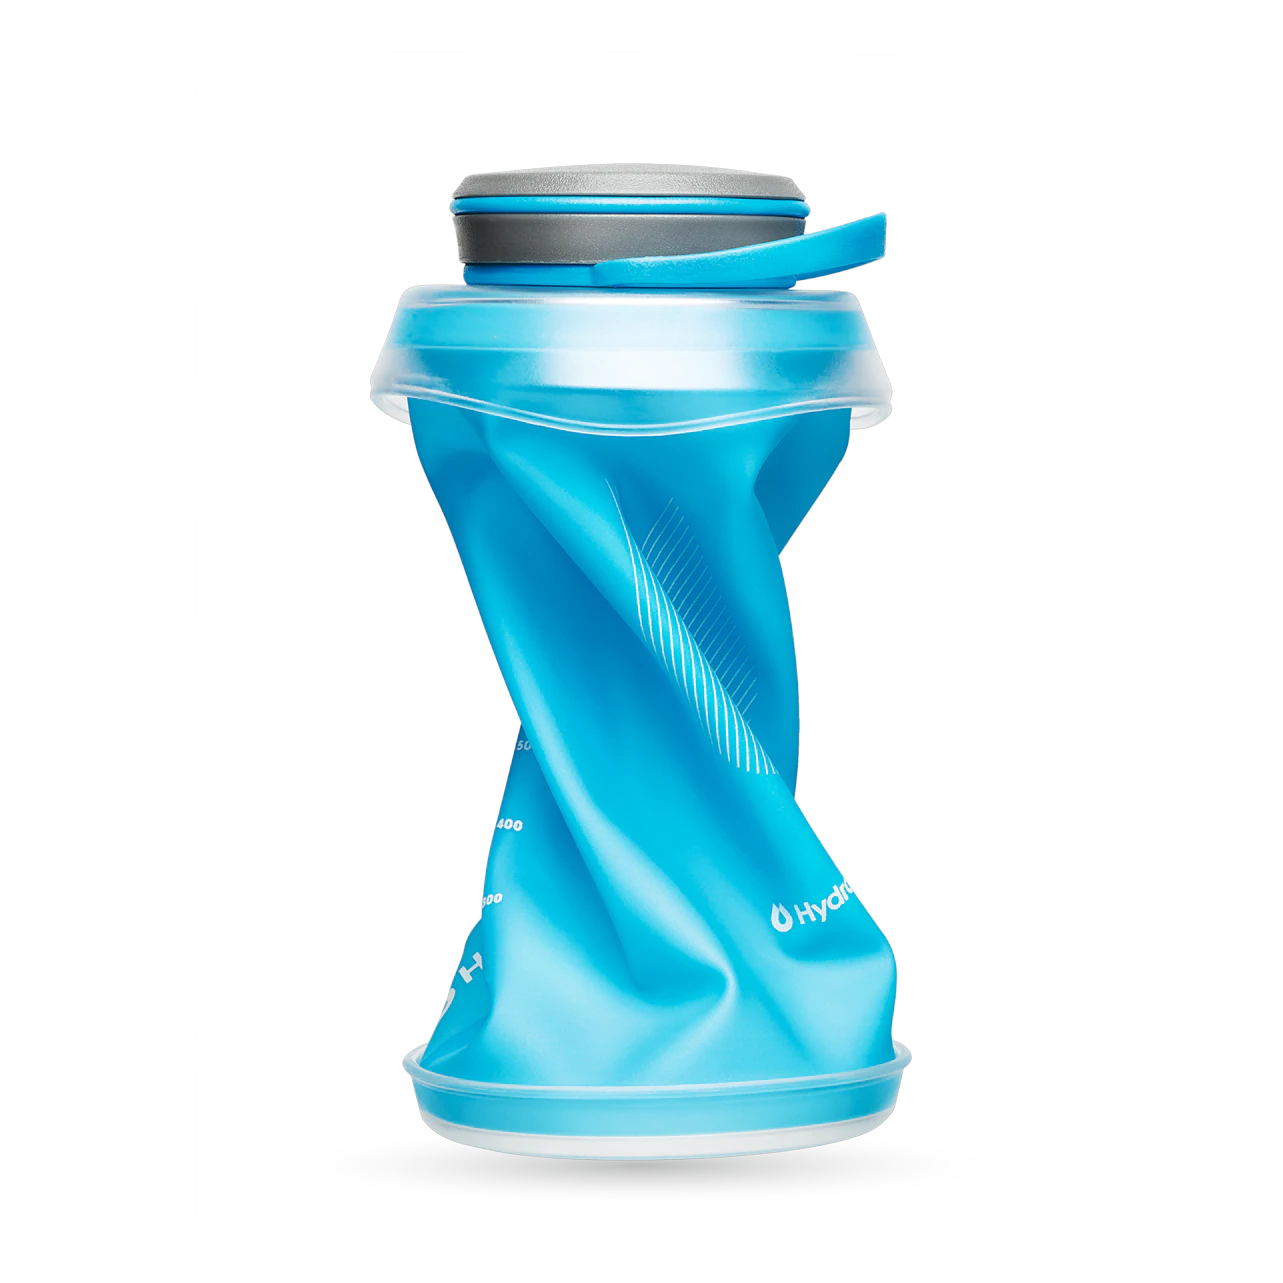 Hydrapak Stash 水樽藍色 (1000ml) | Hydrapak Stash Bottle Blue (1000ml)